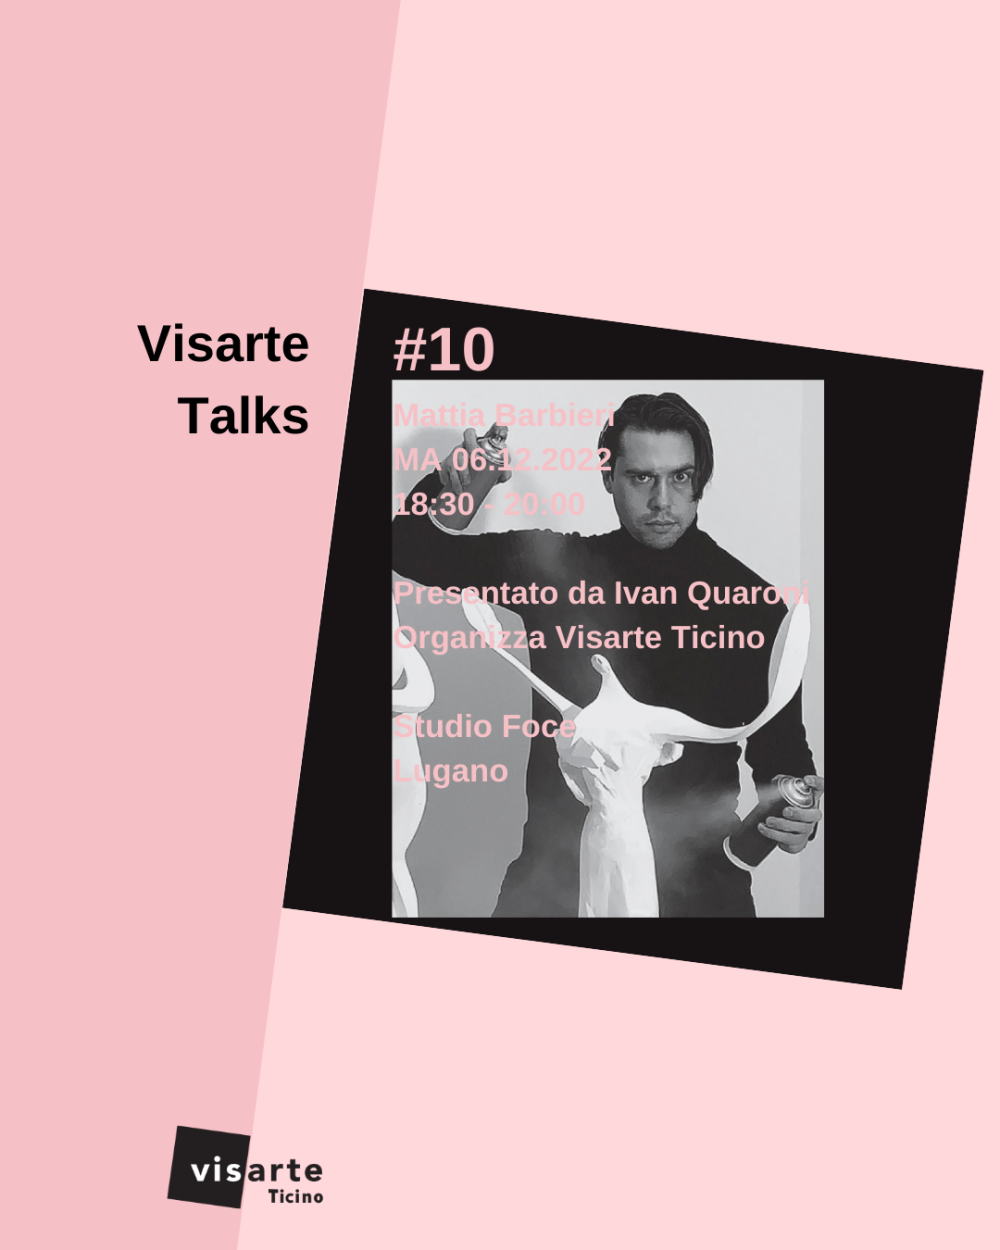 Visarte Talks #10: Mattia Barbieri